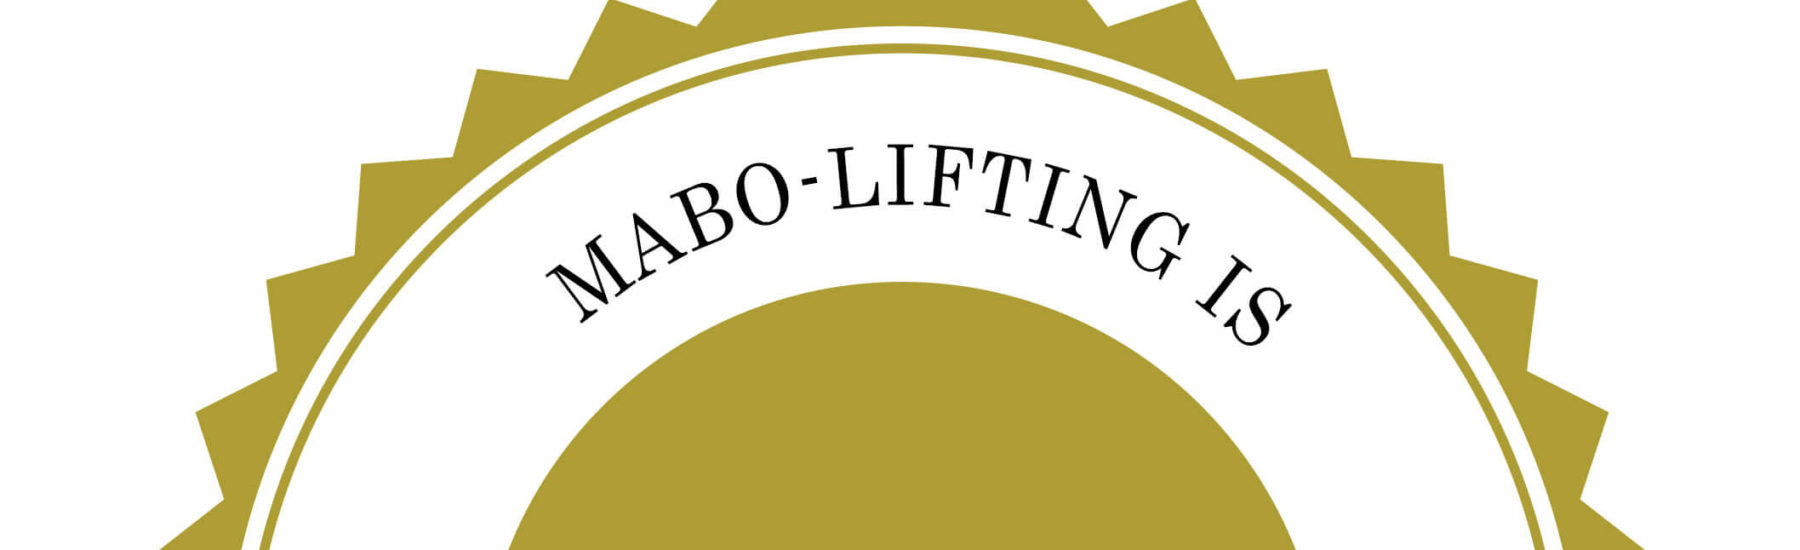 Mabo-Lifting